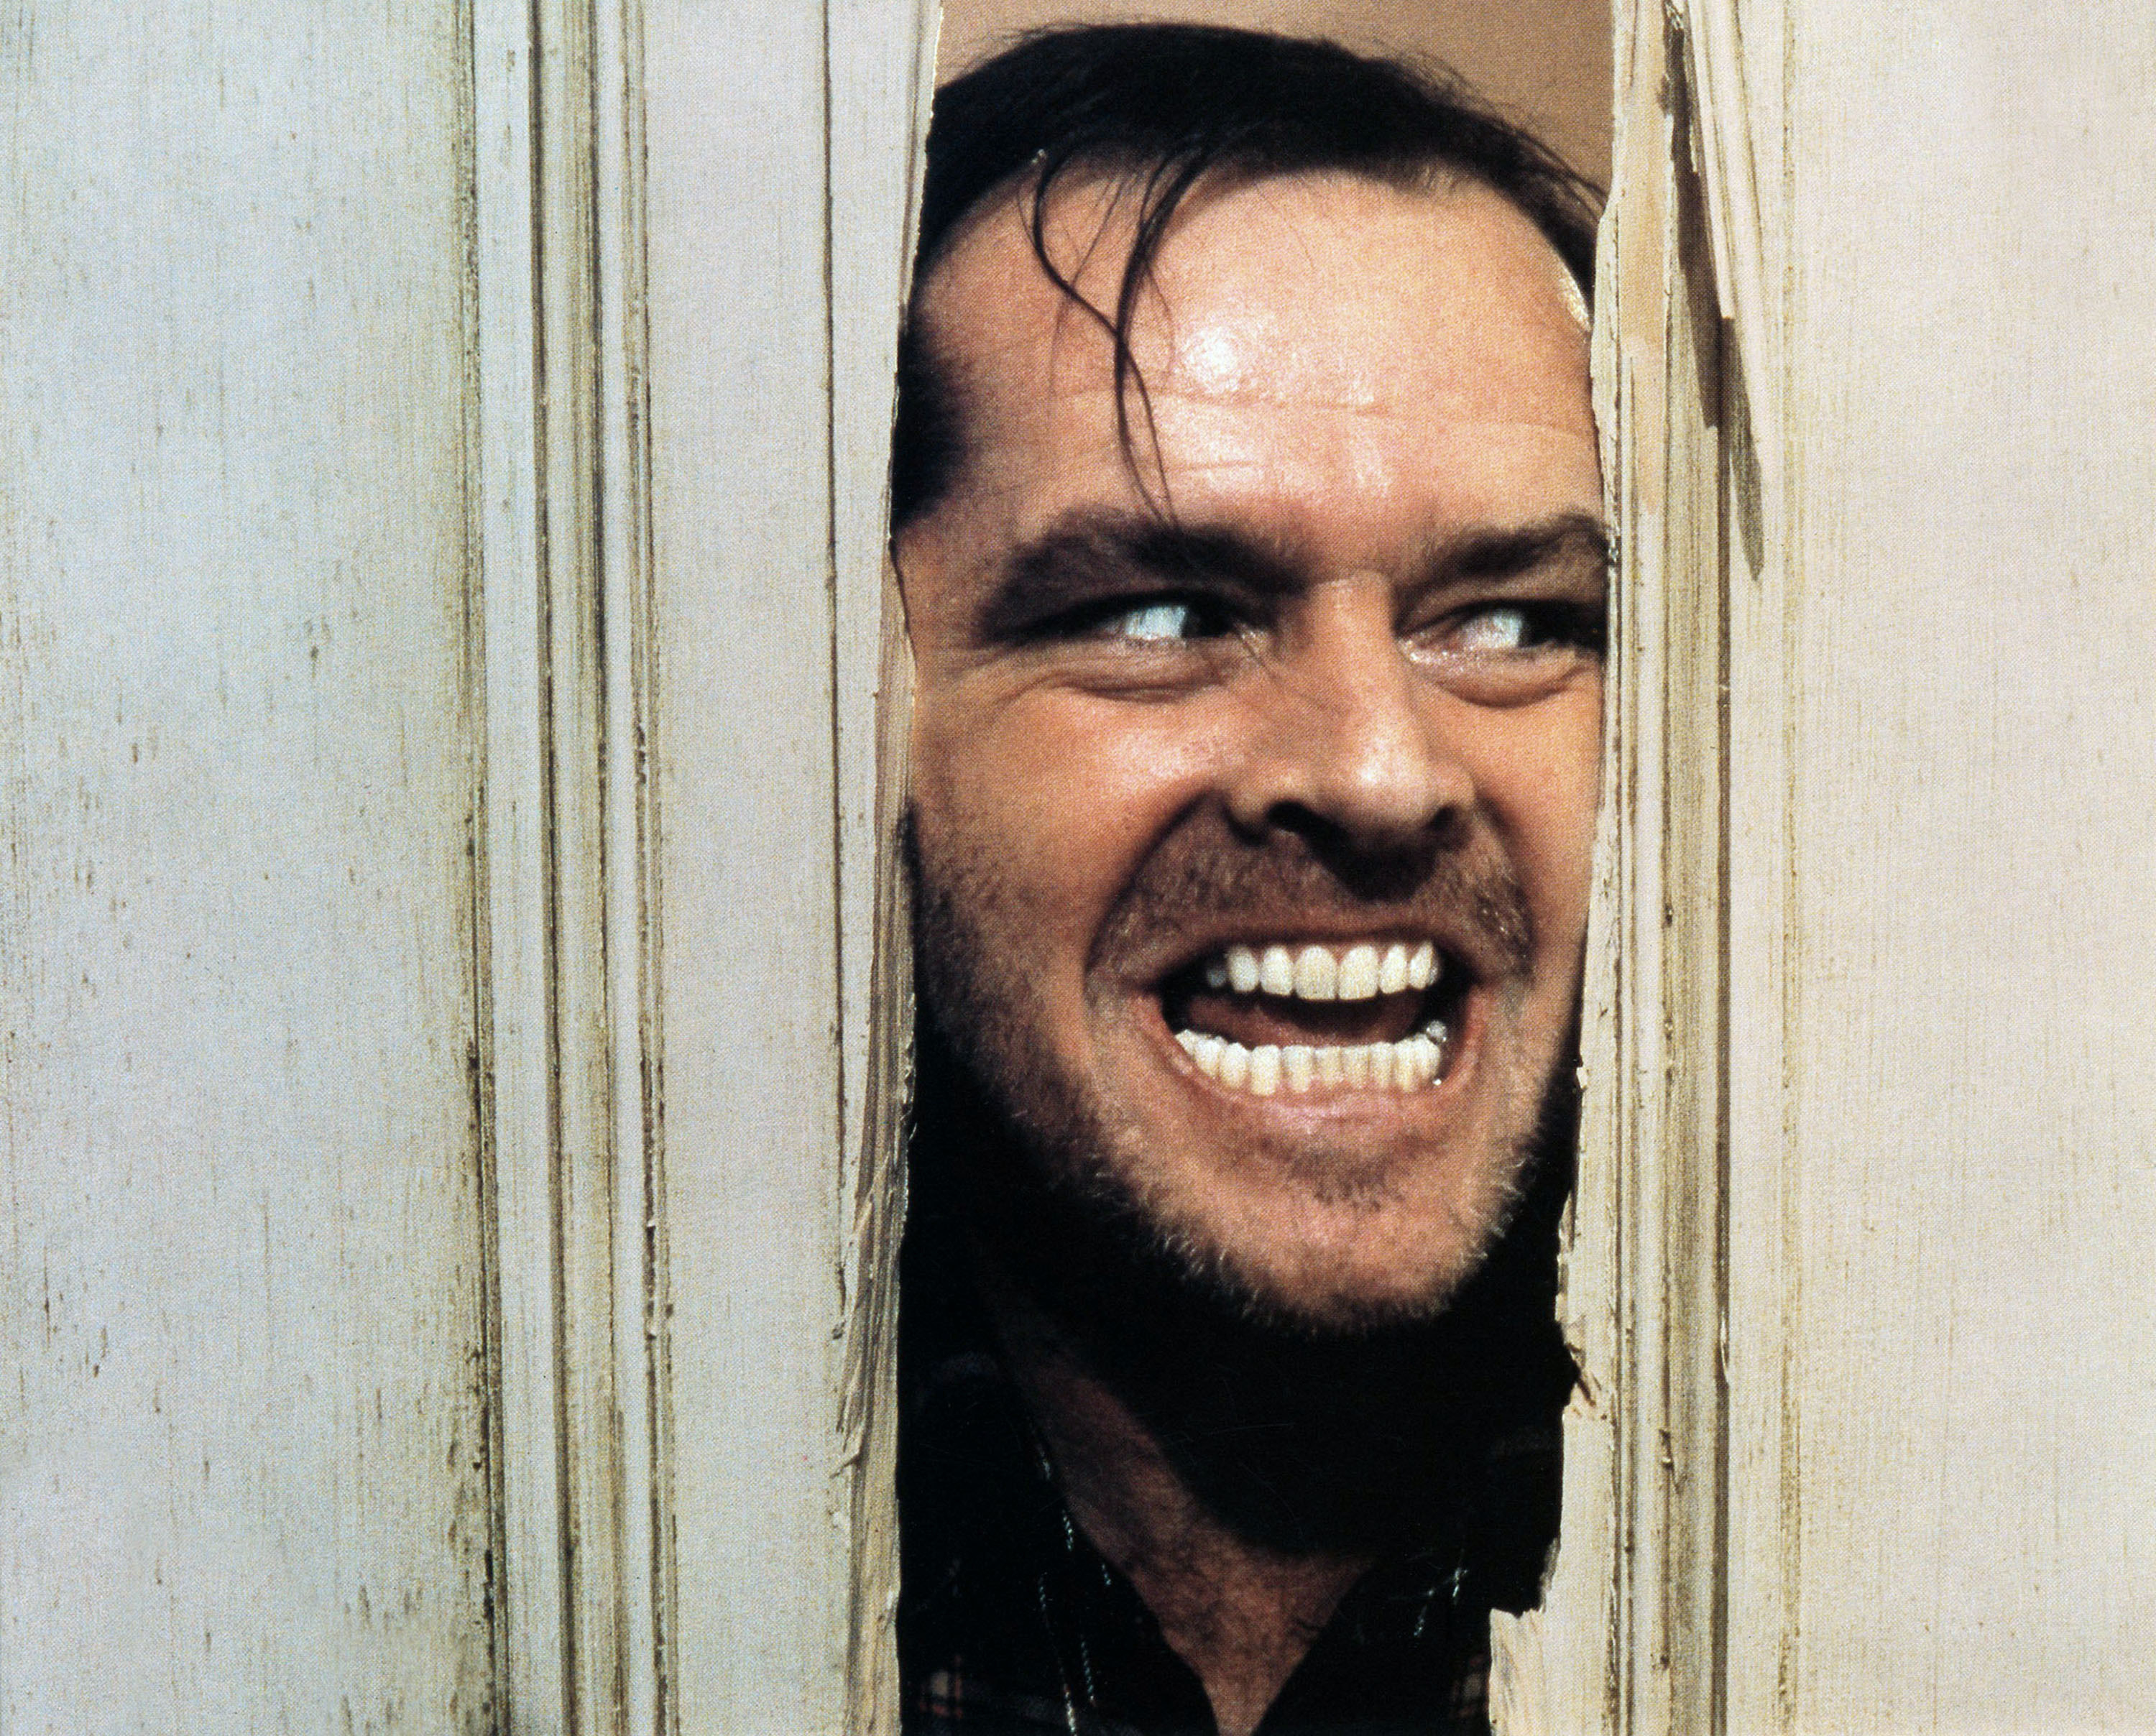 Jack Nicholson in the Shining